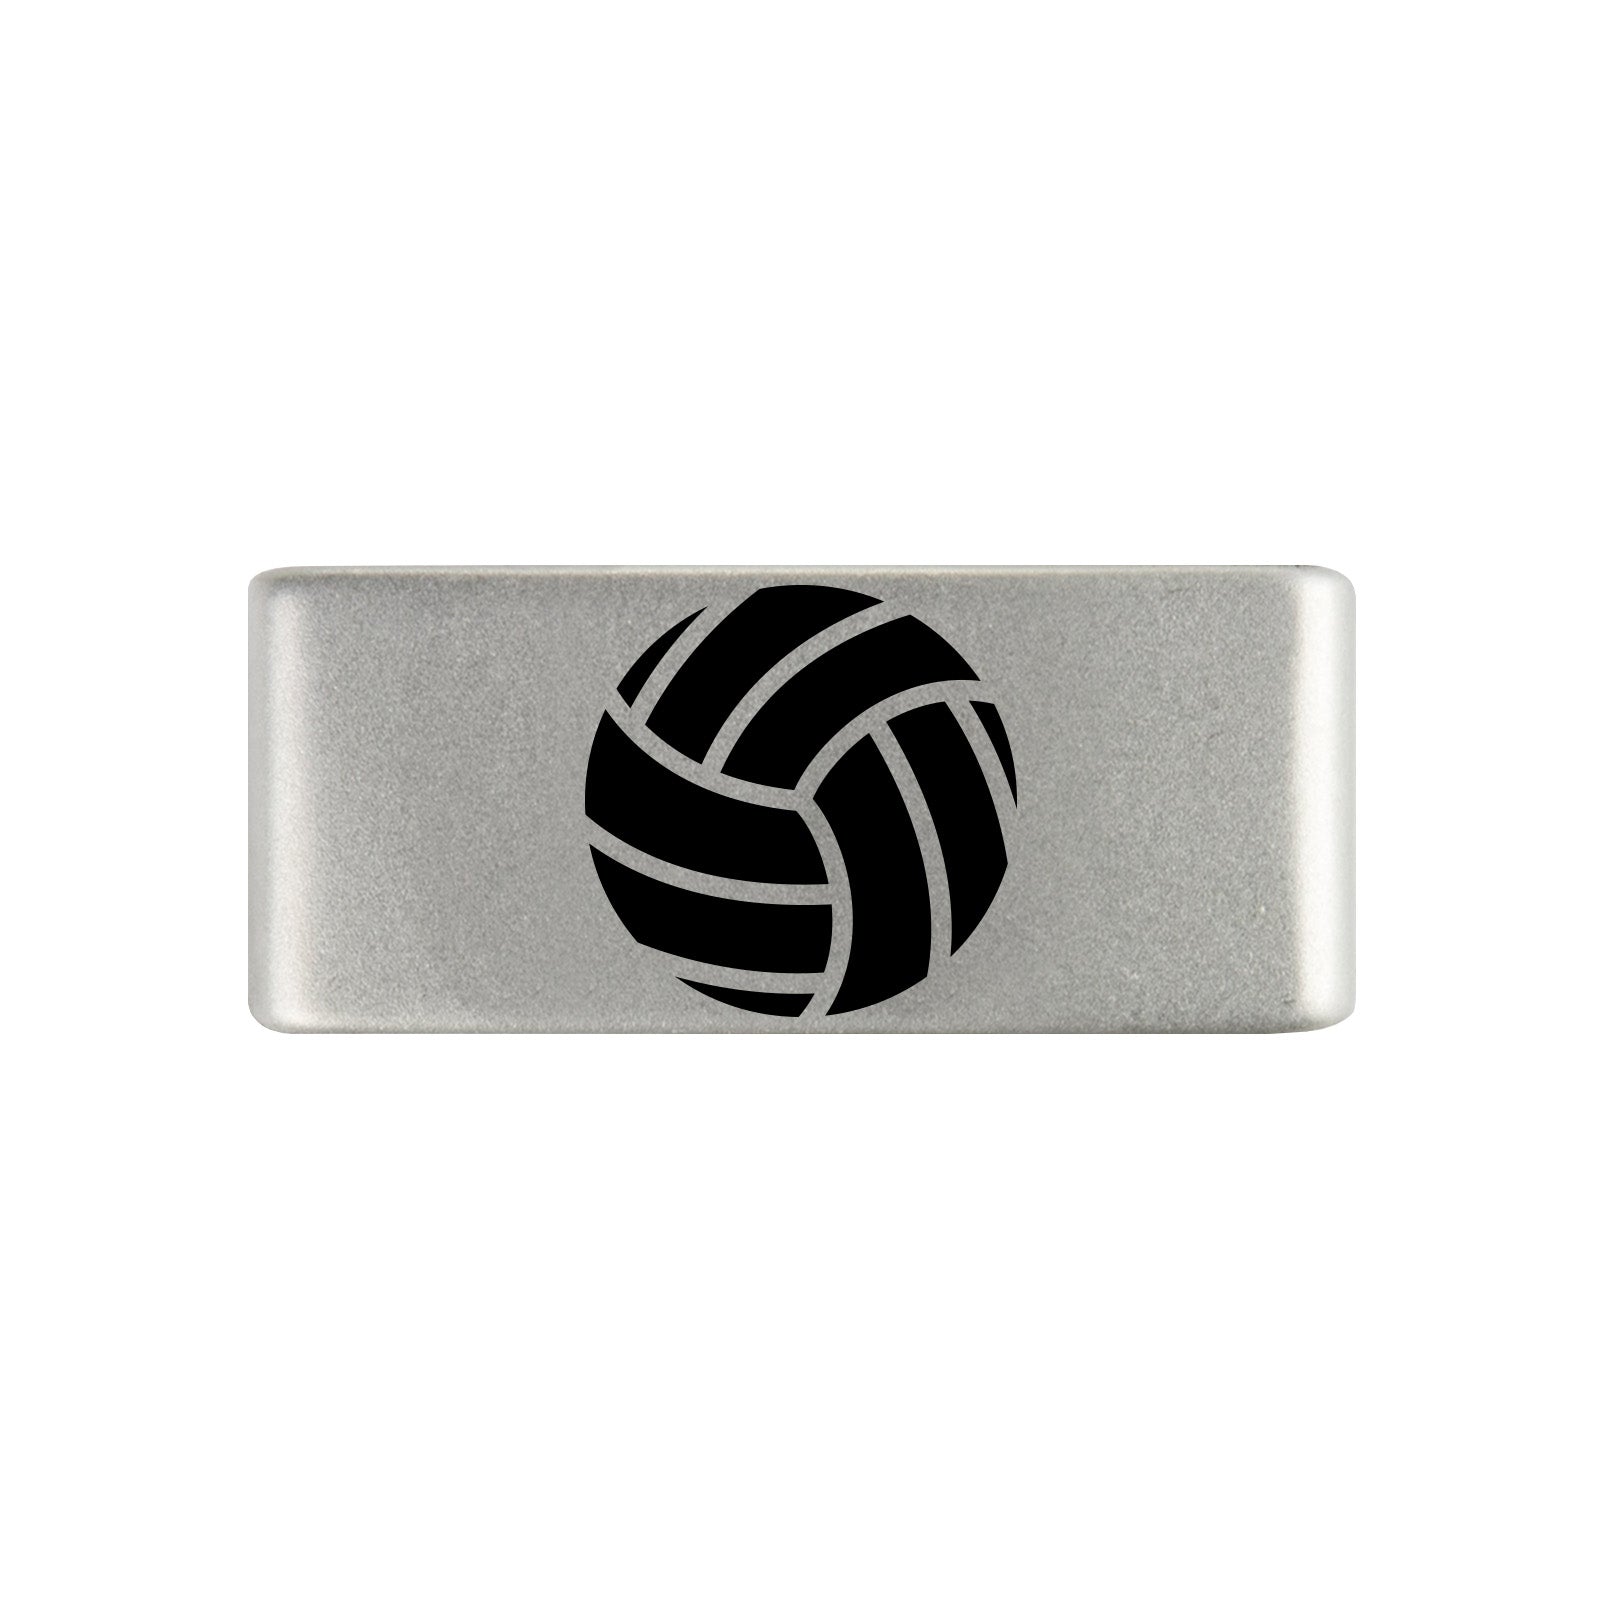 Volleyball Badge Badge 13mm - ROAD iD